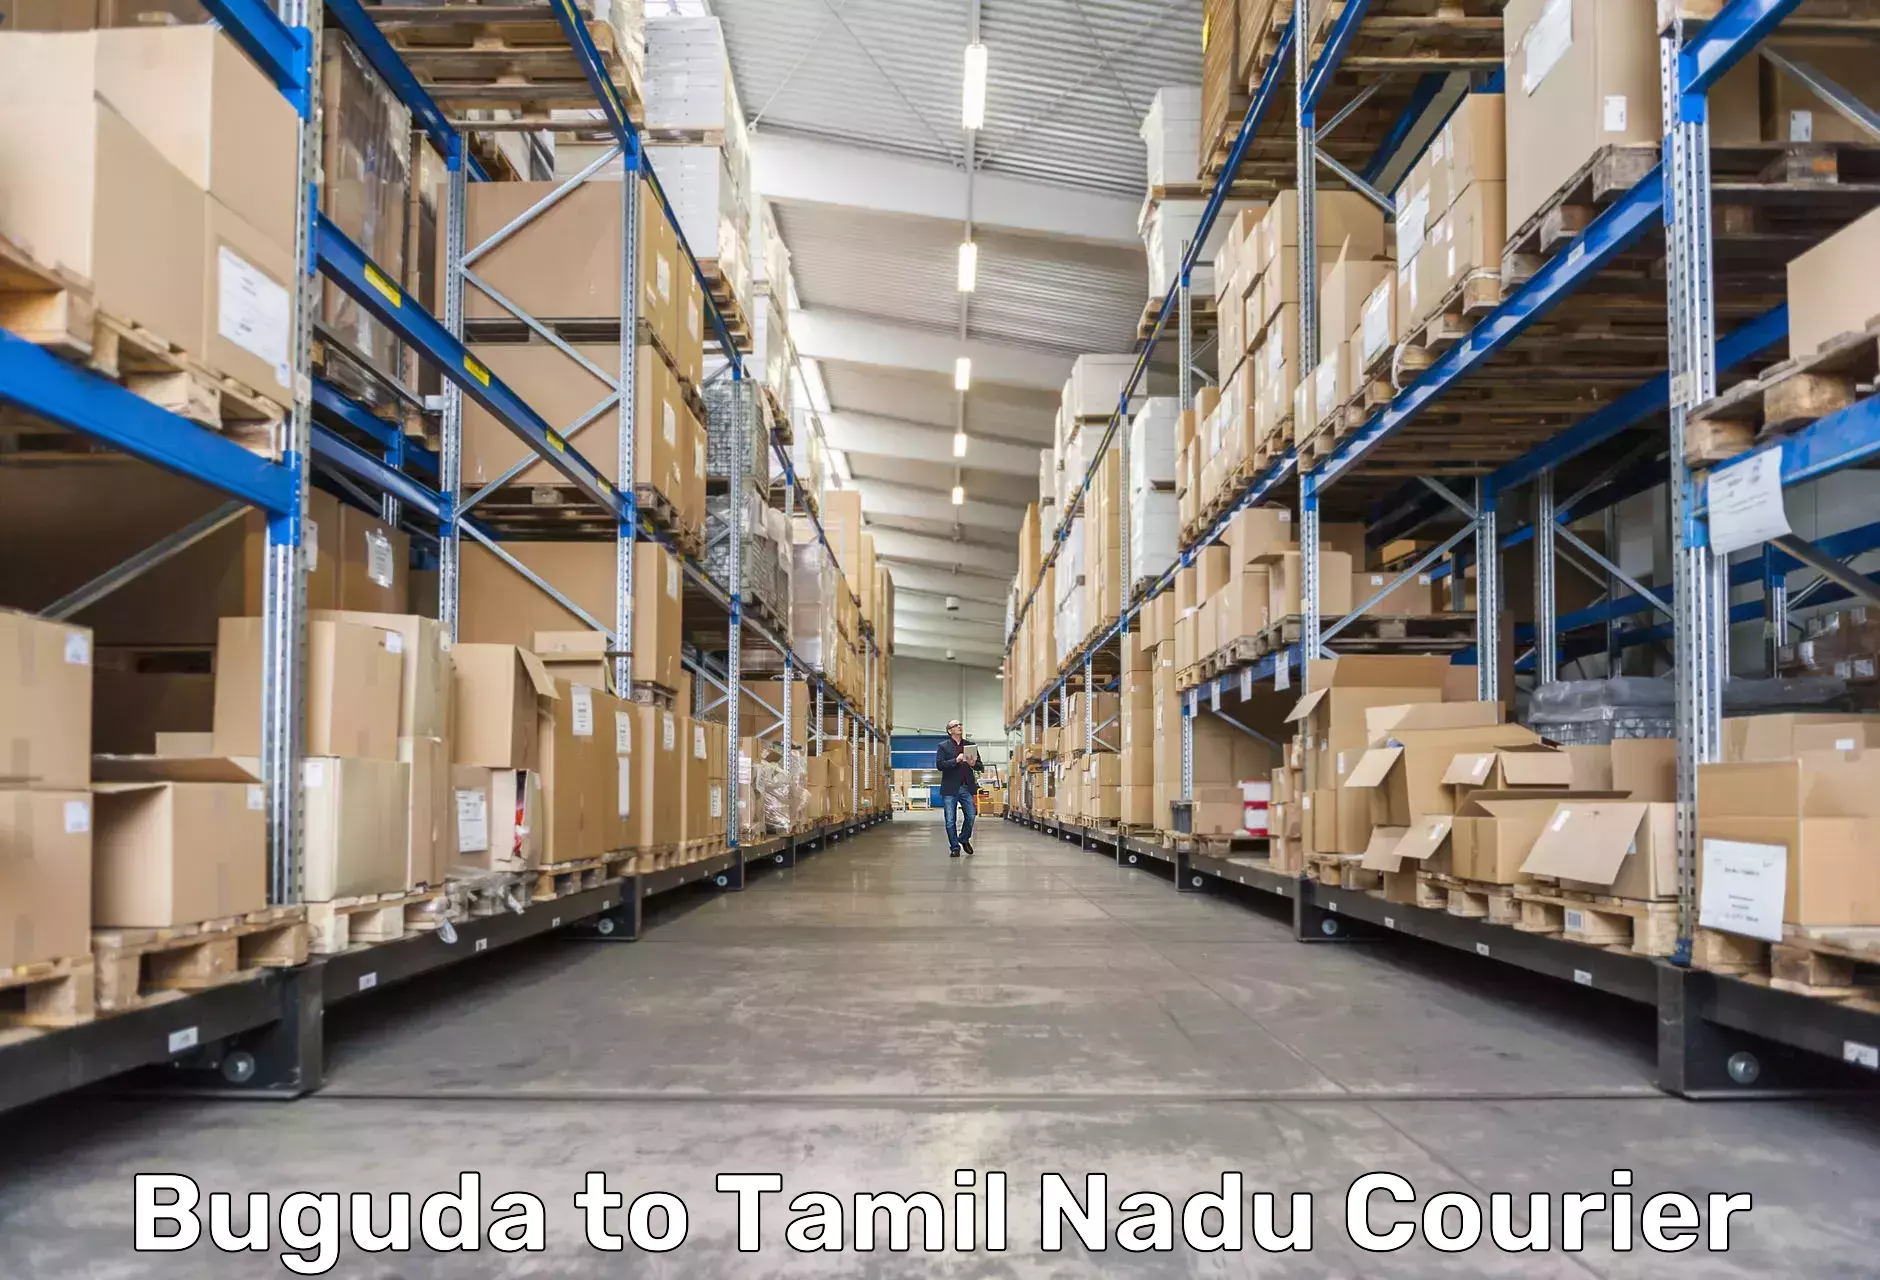 Courier service comparison in Buguda to Tamil Nadu